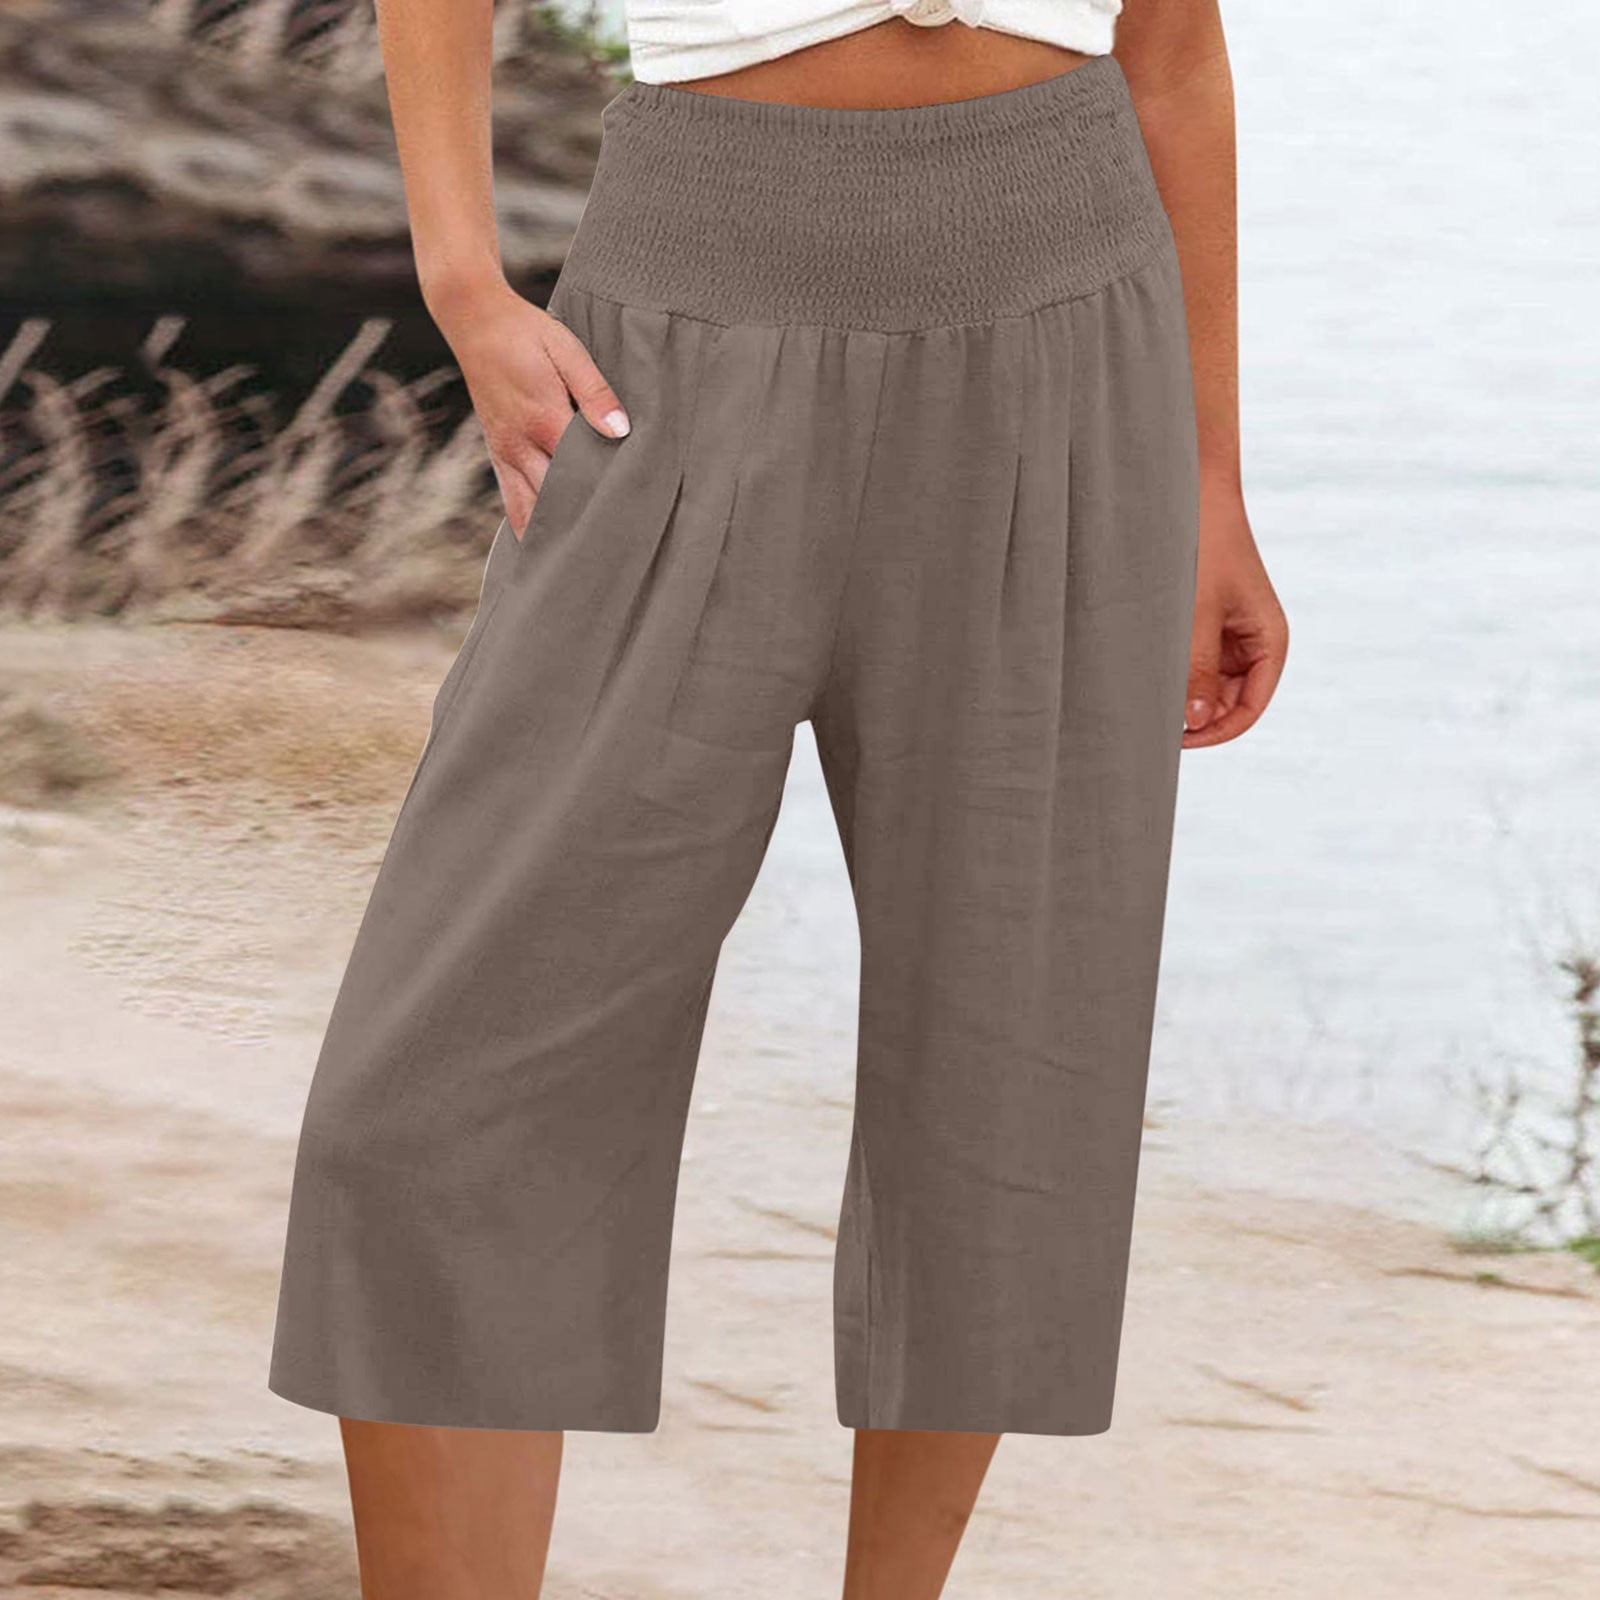 FAKKDUK Capri Pants for Women Casual Summer Smocked Elastic High ...